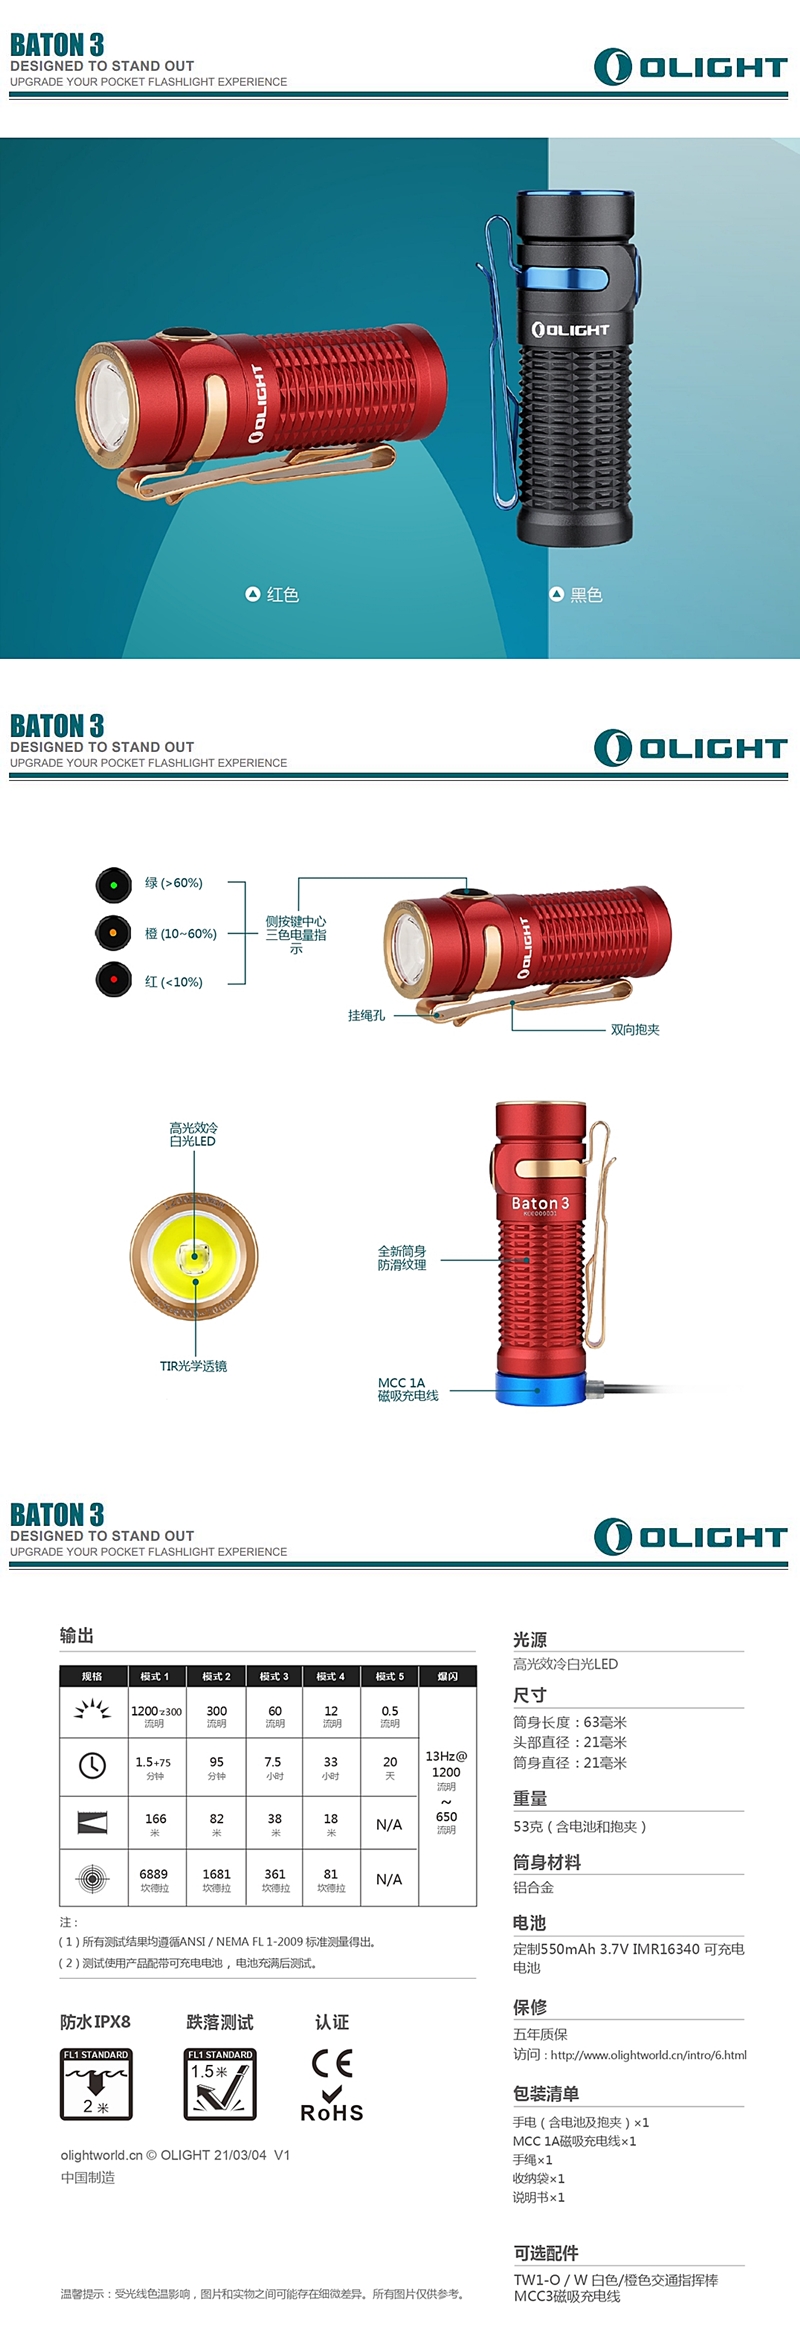 Olight Baton 3 Premium Edition  1,200 lumens powerful Baton 3 and portable wireless charger (3)